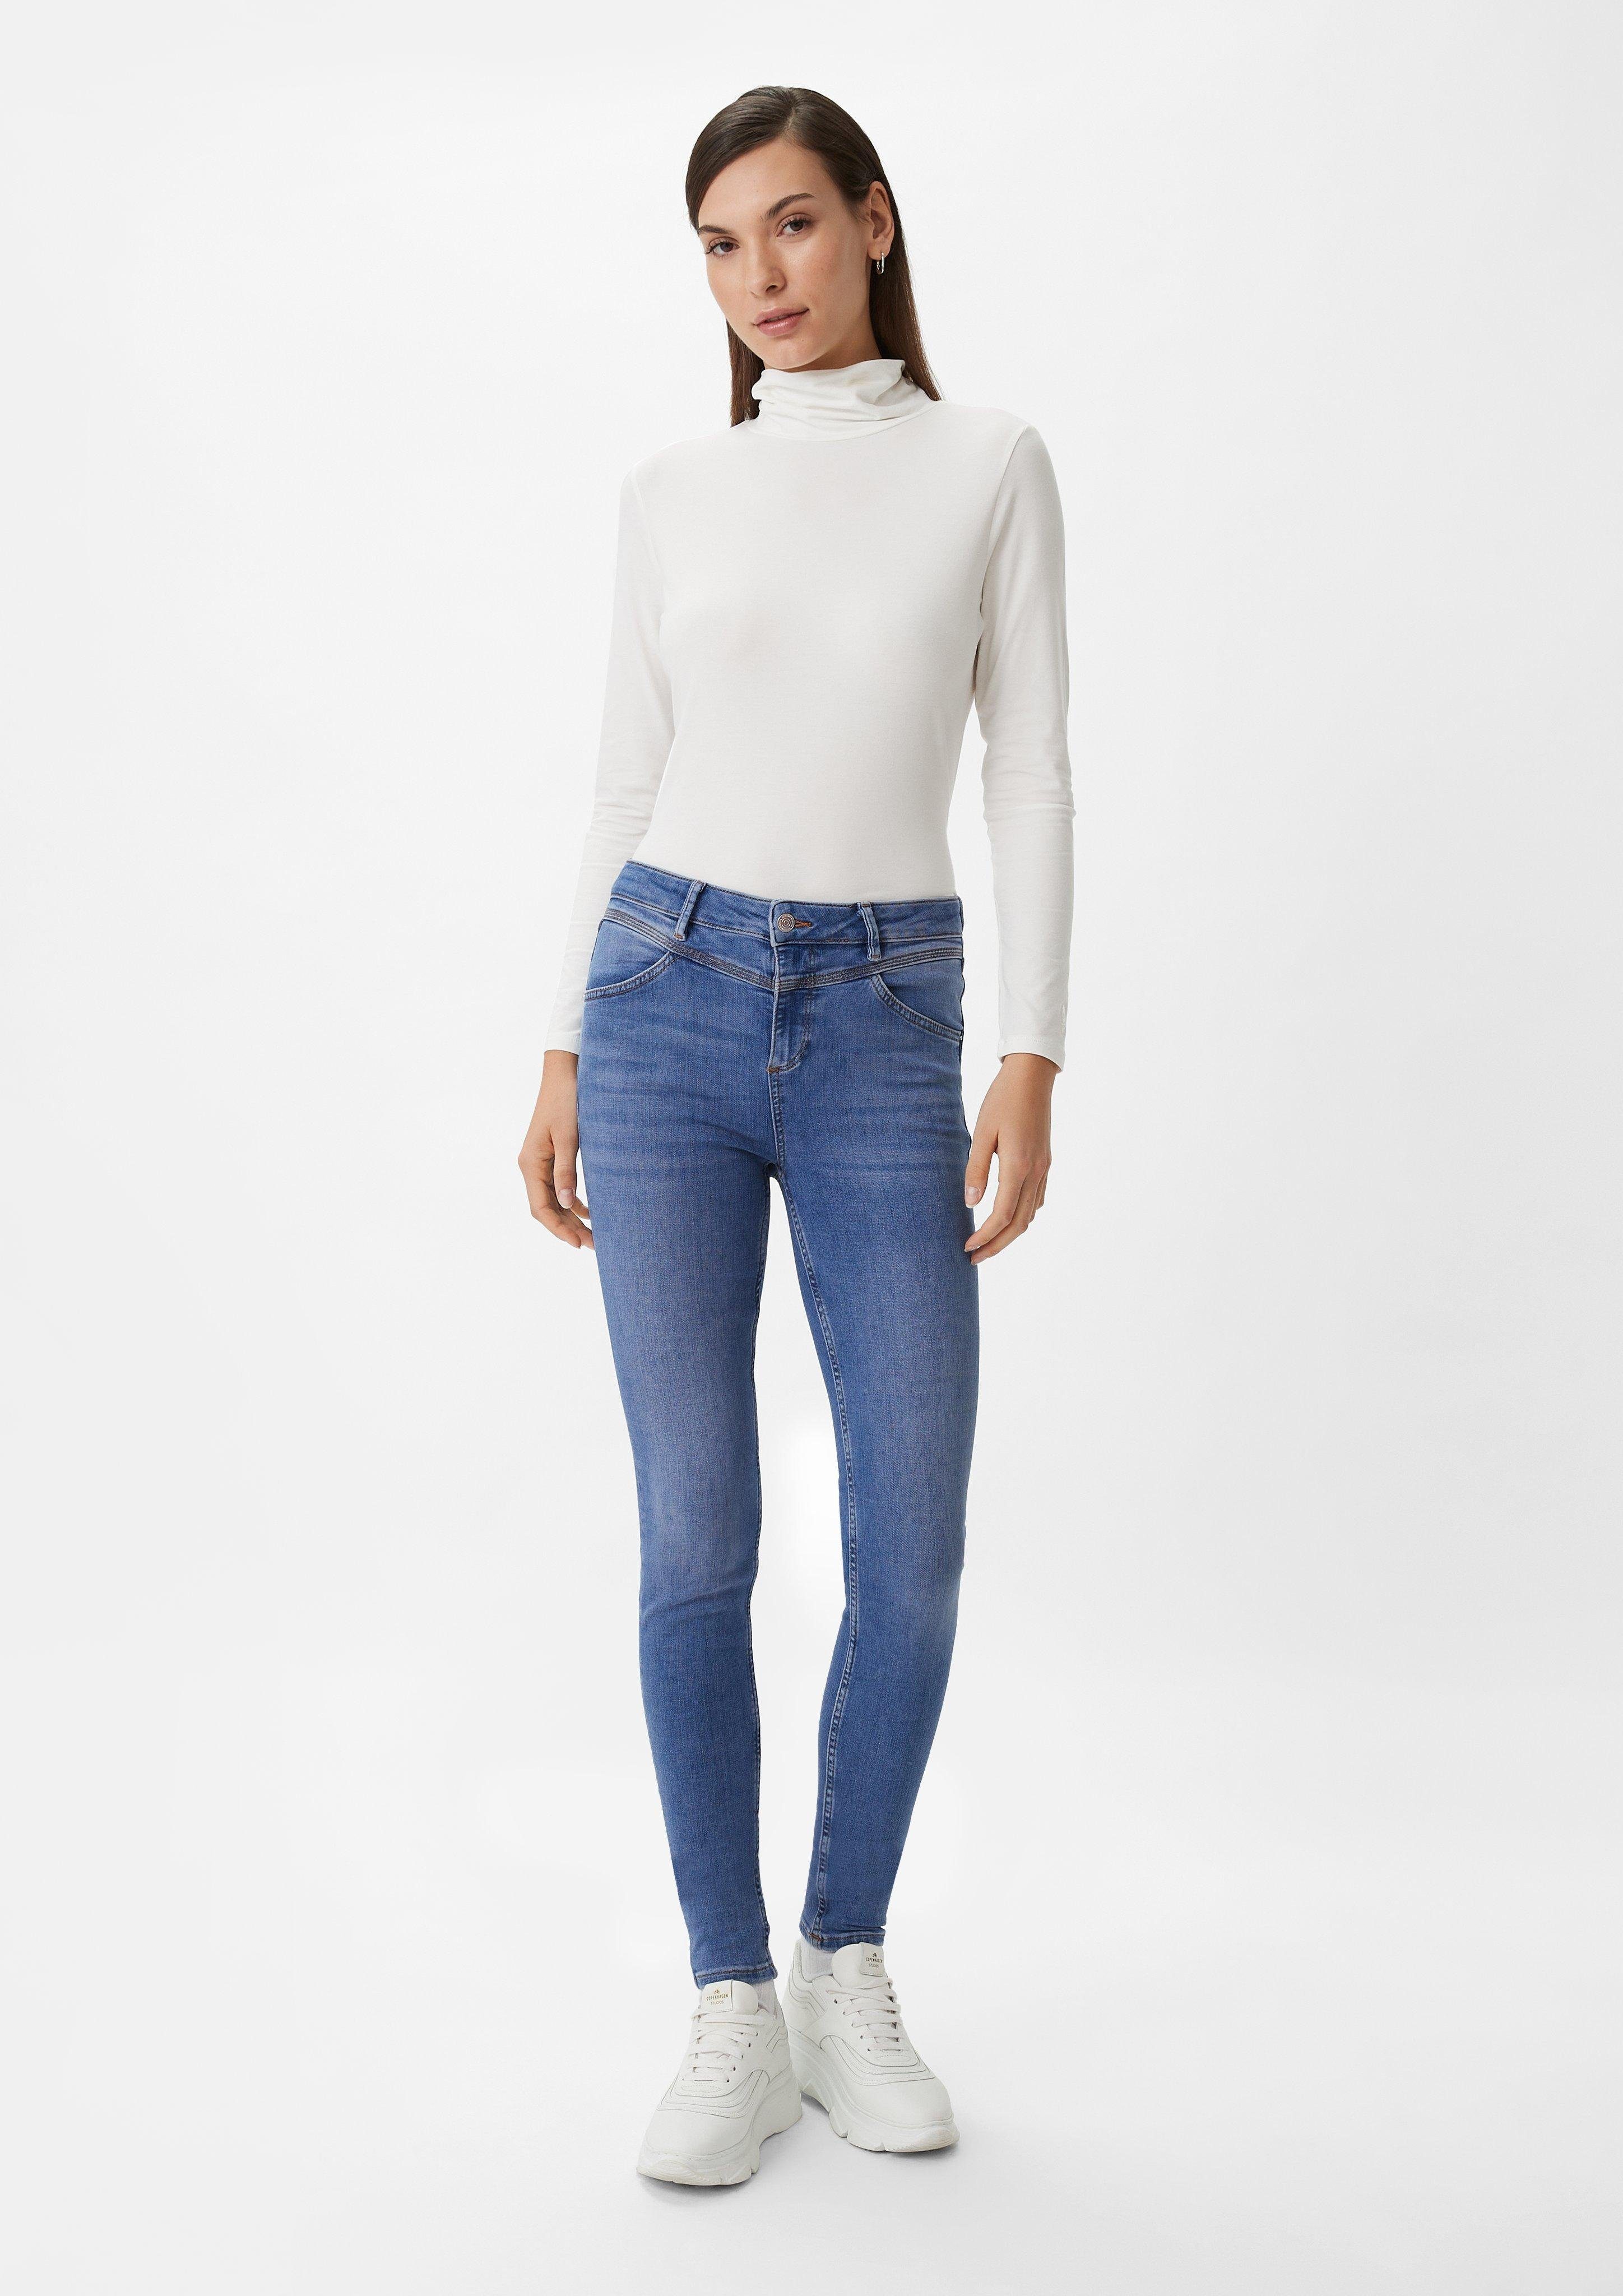 comma casual identity 5-Pocket-Jeans Super skinny: Jeans mit Sattelbund Garment Dye, Kontrastnähte, Leder-Patch